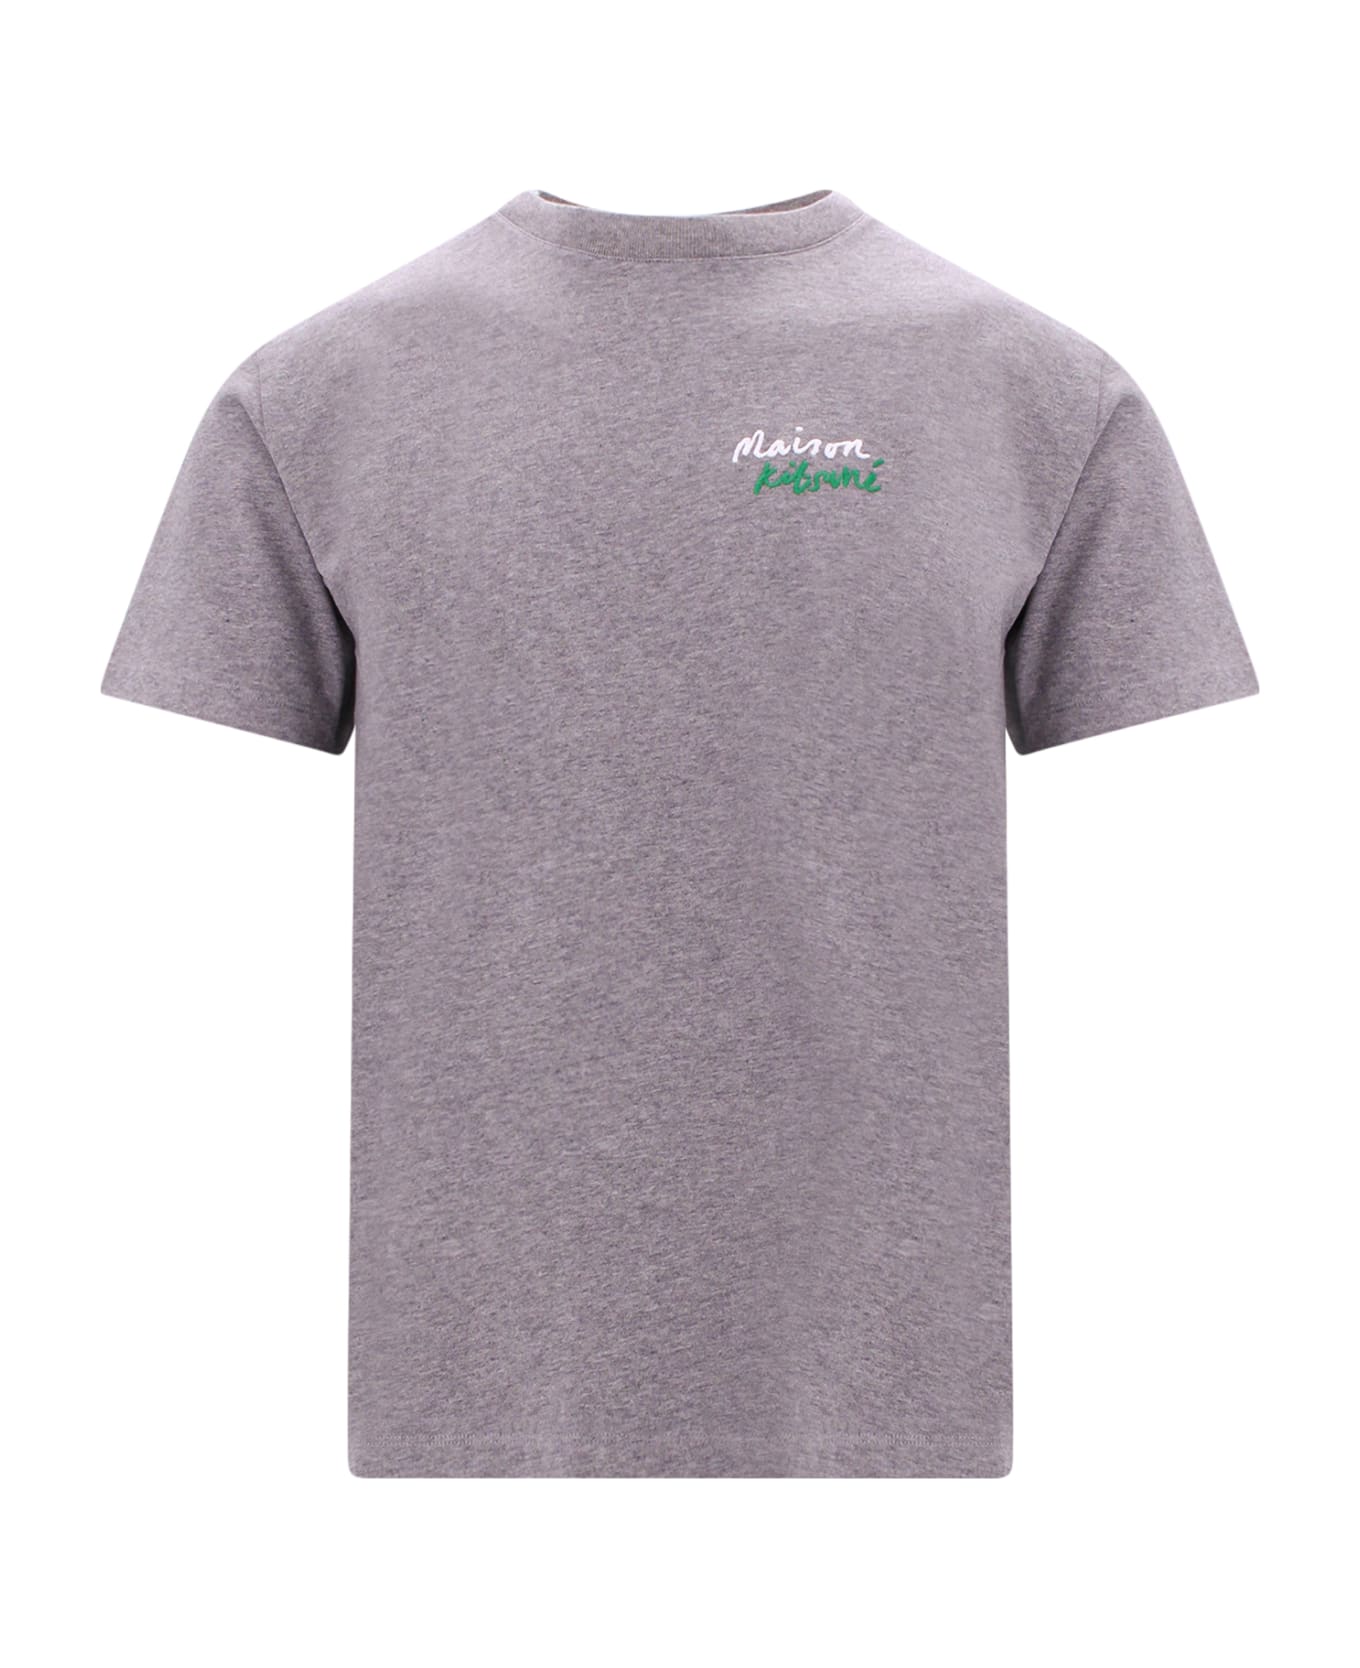 Maison Kitsuné T-shirt - Grey